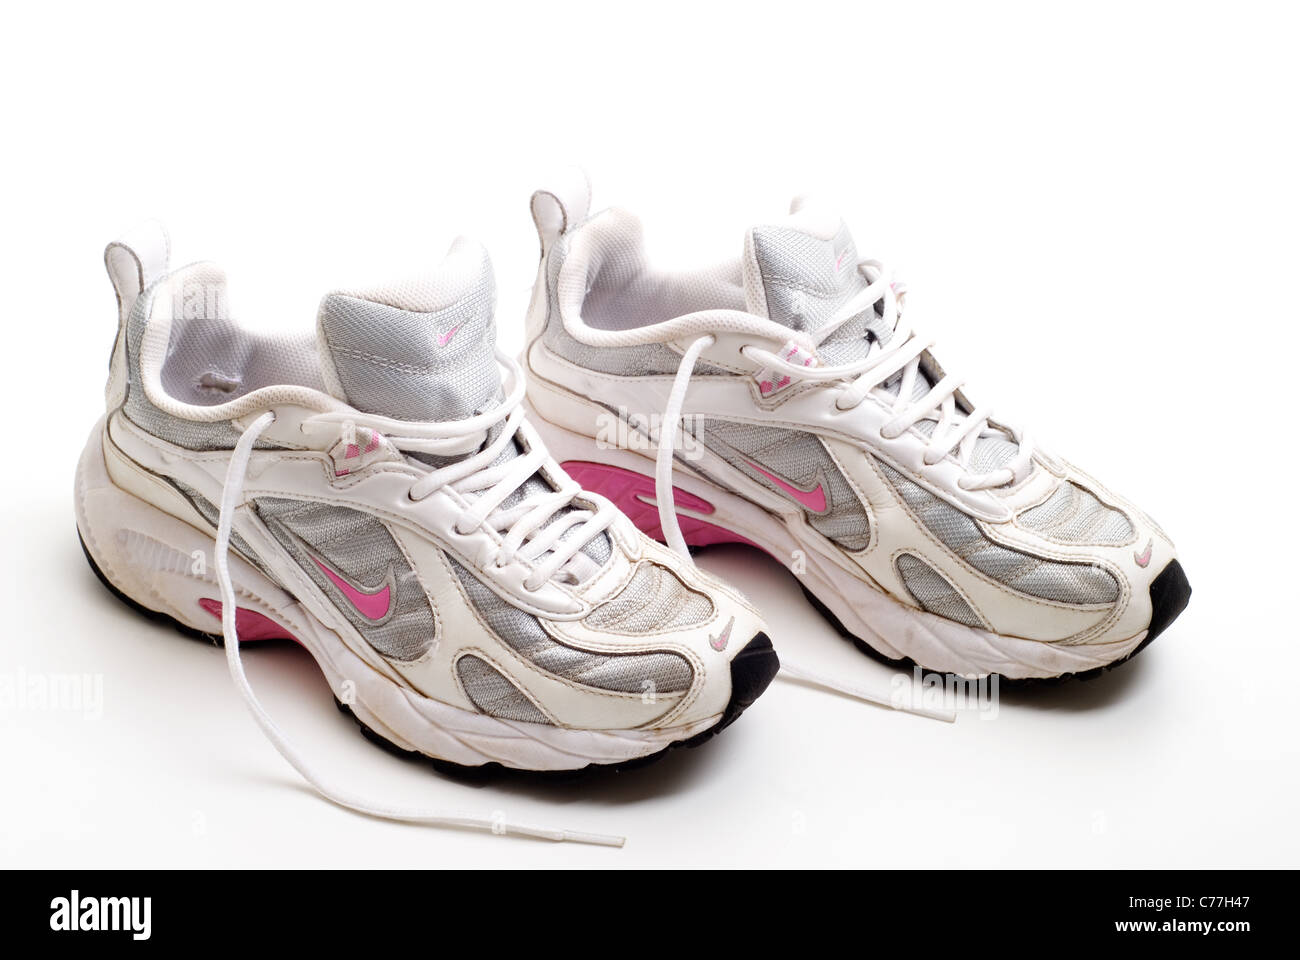 Alte gebrauchte Paar Nike-Laufschuhe ausgeschnitten Stockfotografie - Alamy